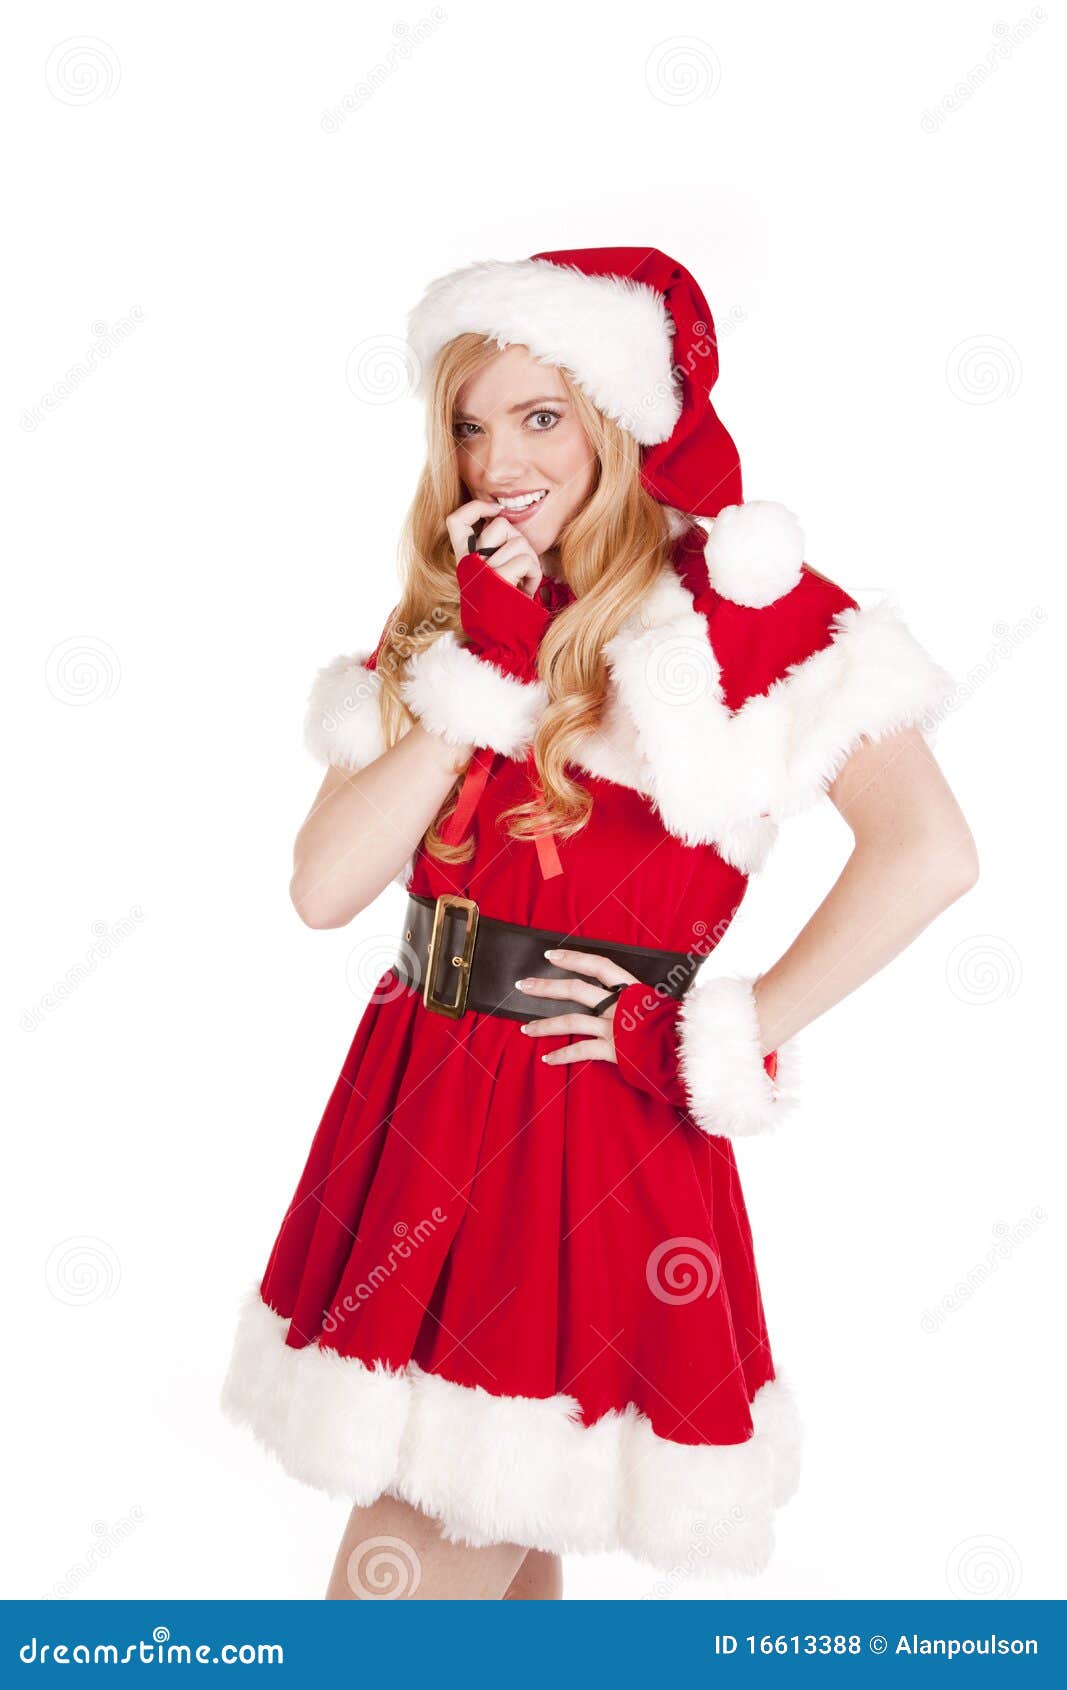 Mrs Santa teasing stock photo. Image of december, expression - 16613388